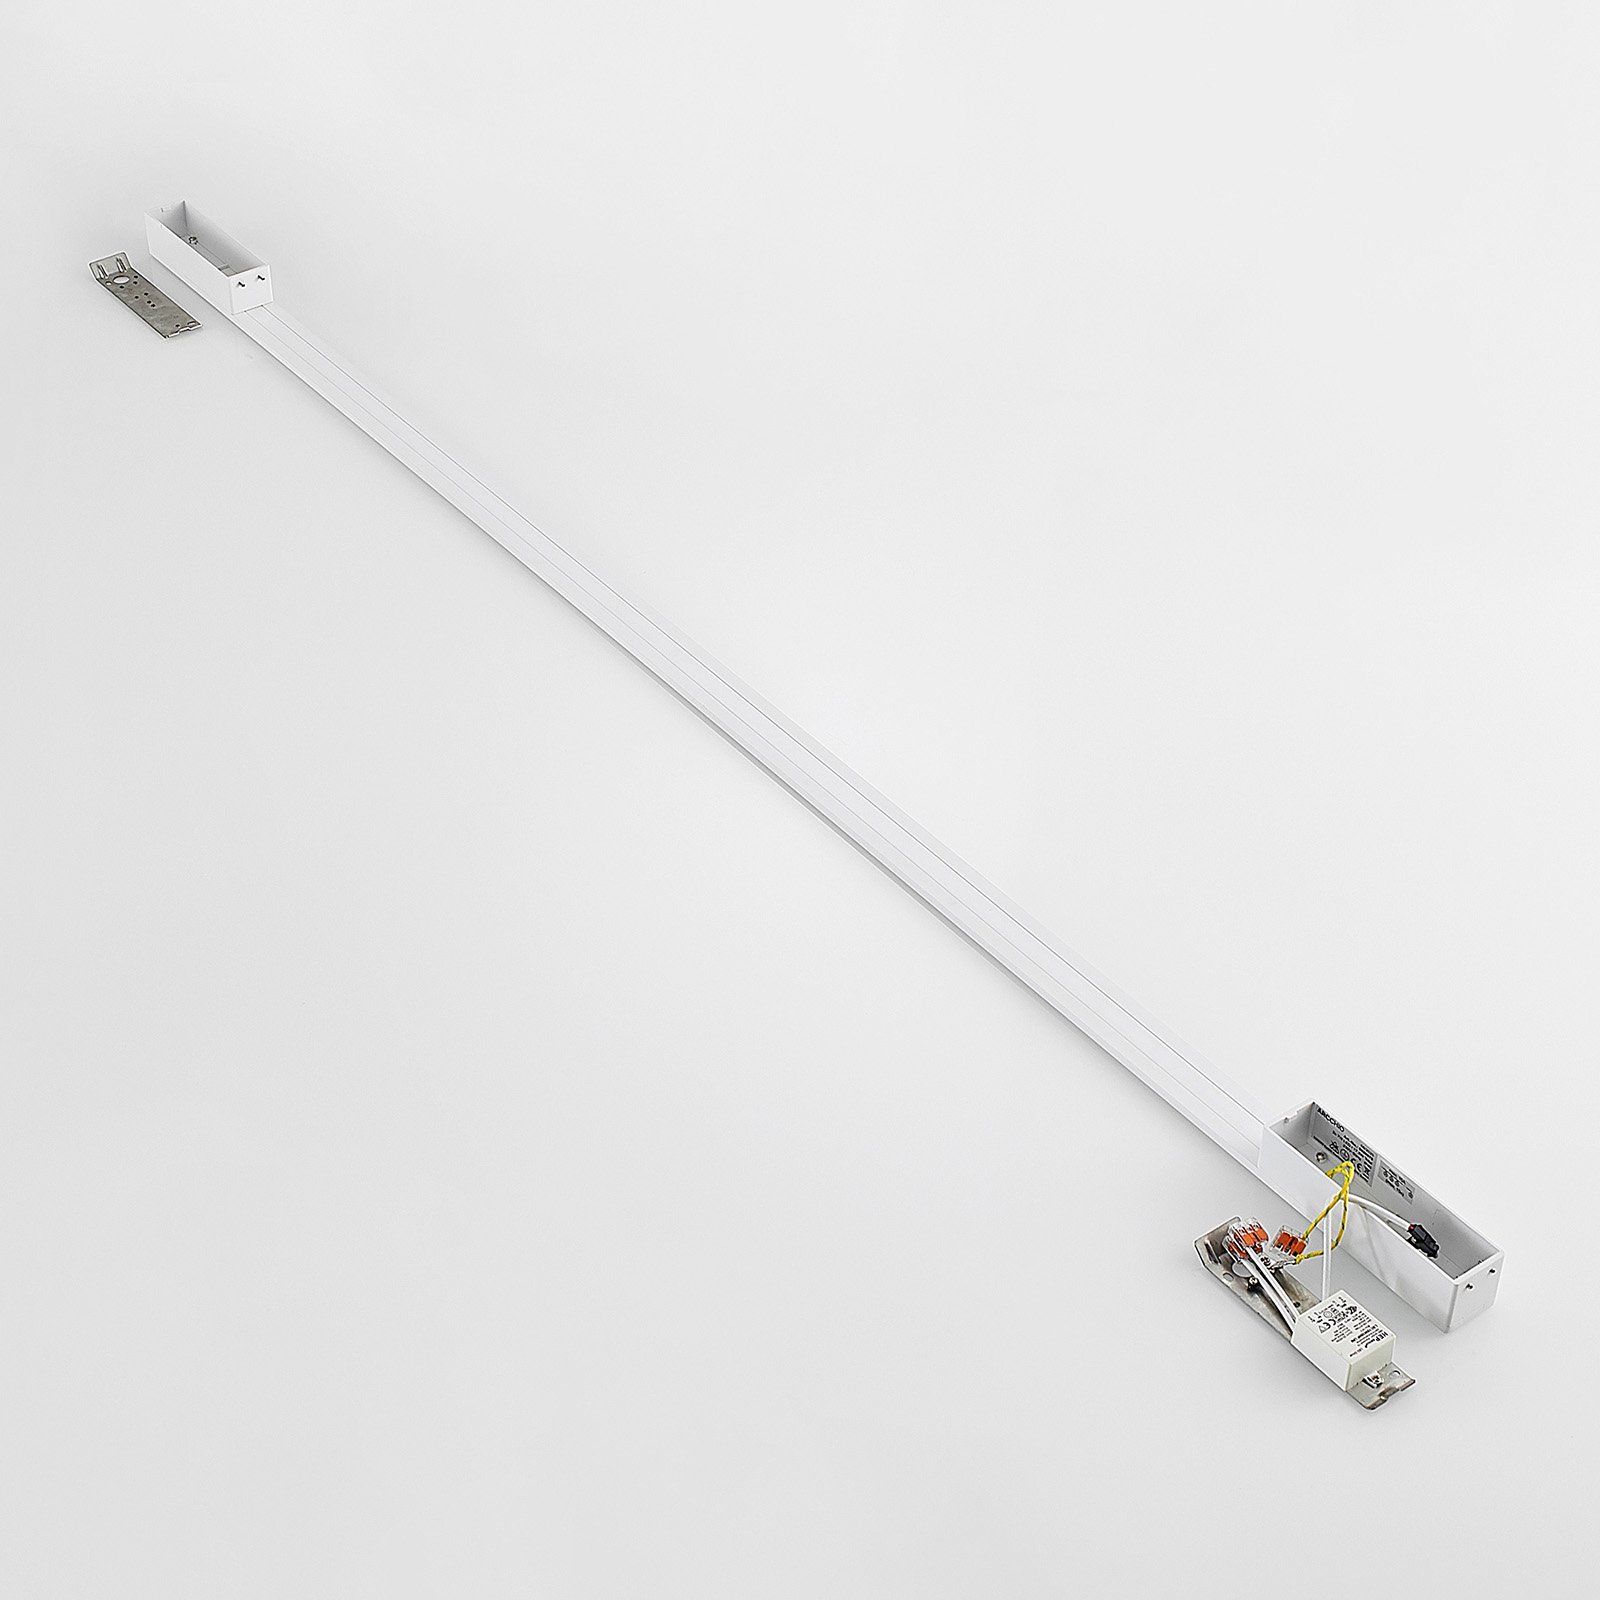 Arcchio Ivano LED wall light 170 cm blanco